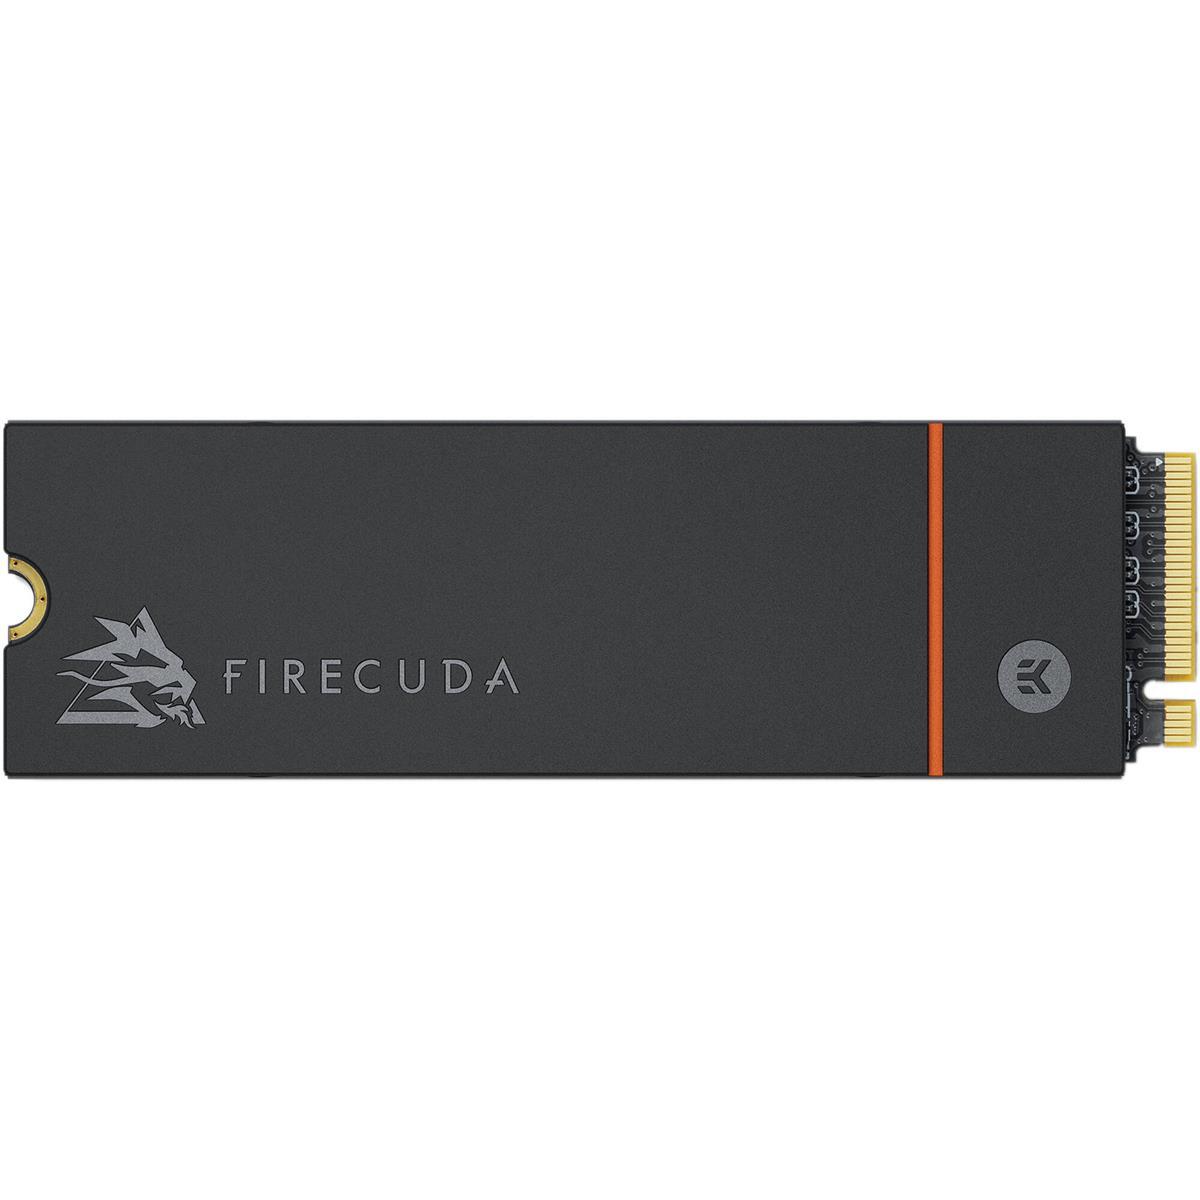 

Sennheiser Seagate FireCuda 530 4TB NVMe PCIe 4.0 x4 M.2 Internal SSD with Heatsink